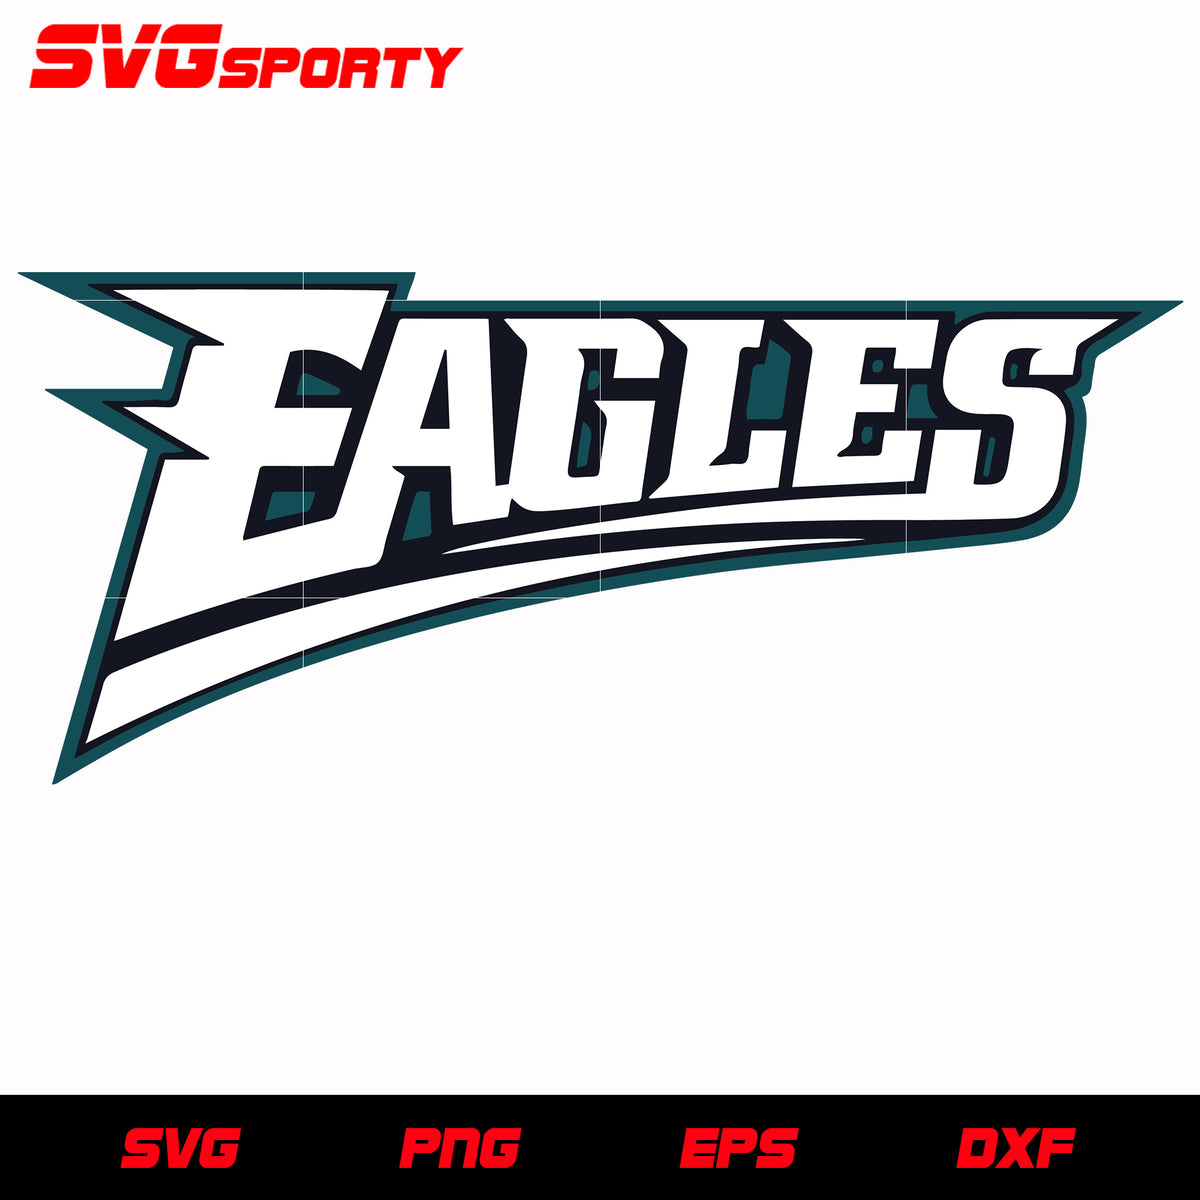 Philadelphia Eagles SVG Cut Files - vector svg format